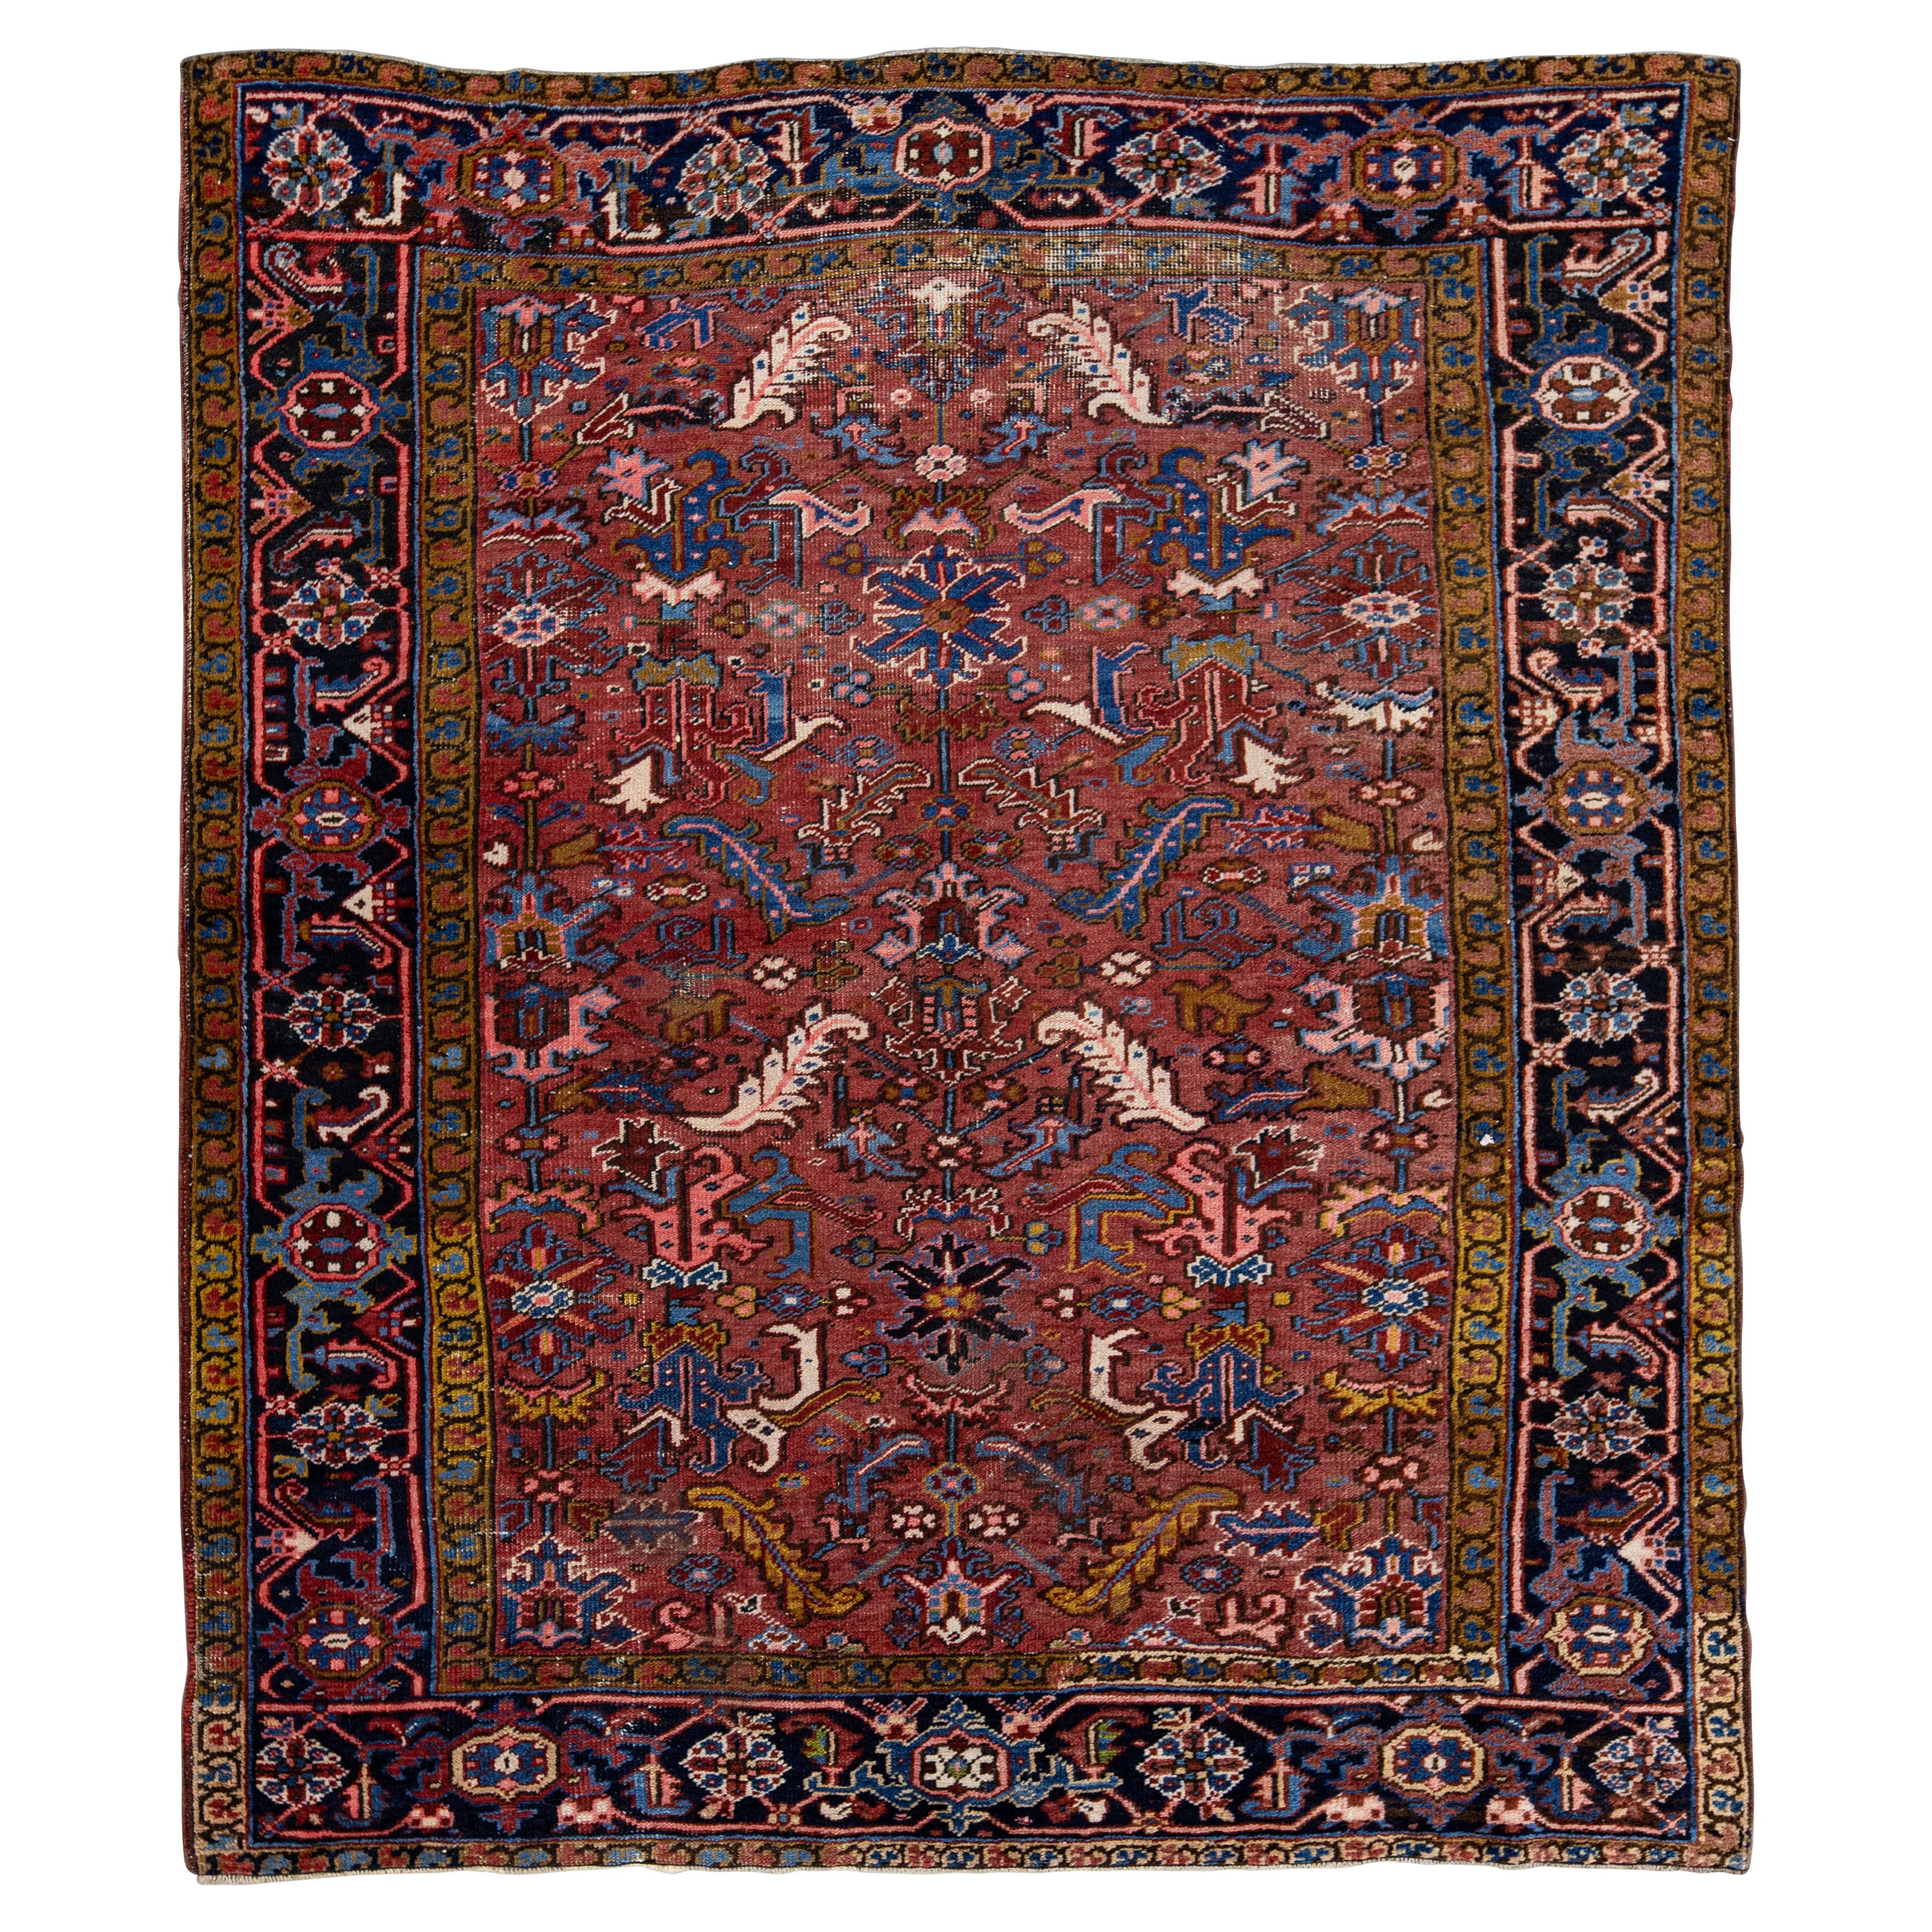 Antique Persian Heriz Handmade Allover Floral Burgundy Wool Rug